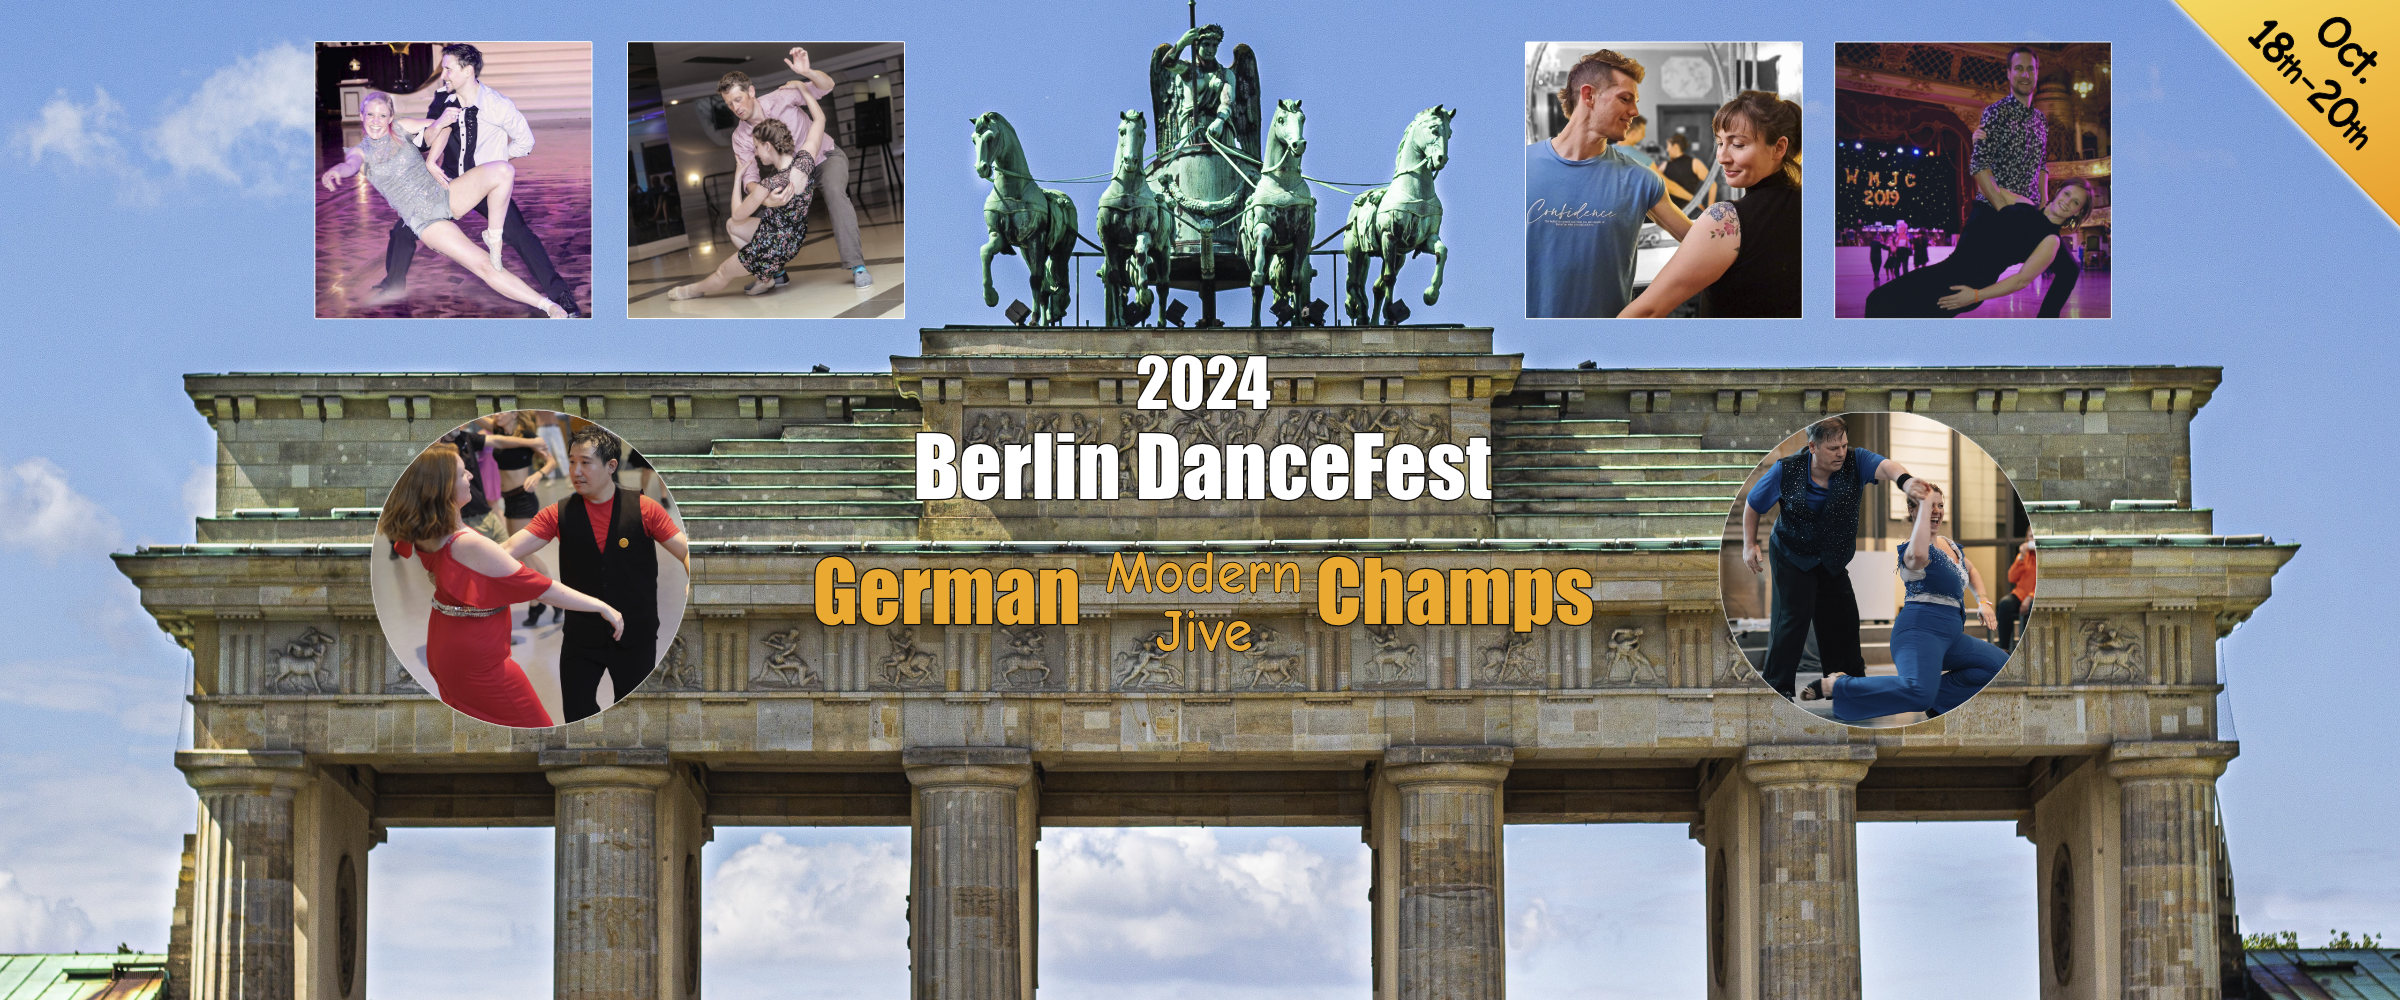 Tanzwochenende Berlin DanceFest & German MJ Championships - Book now!